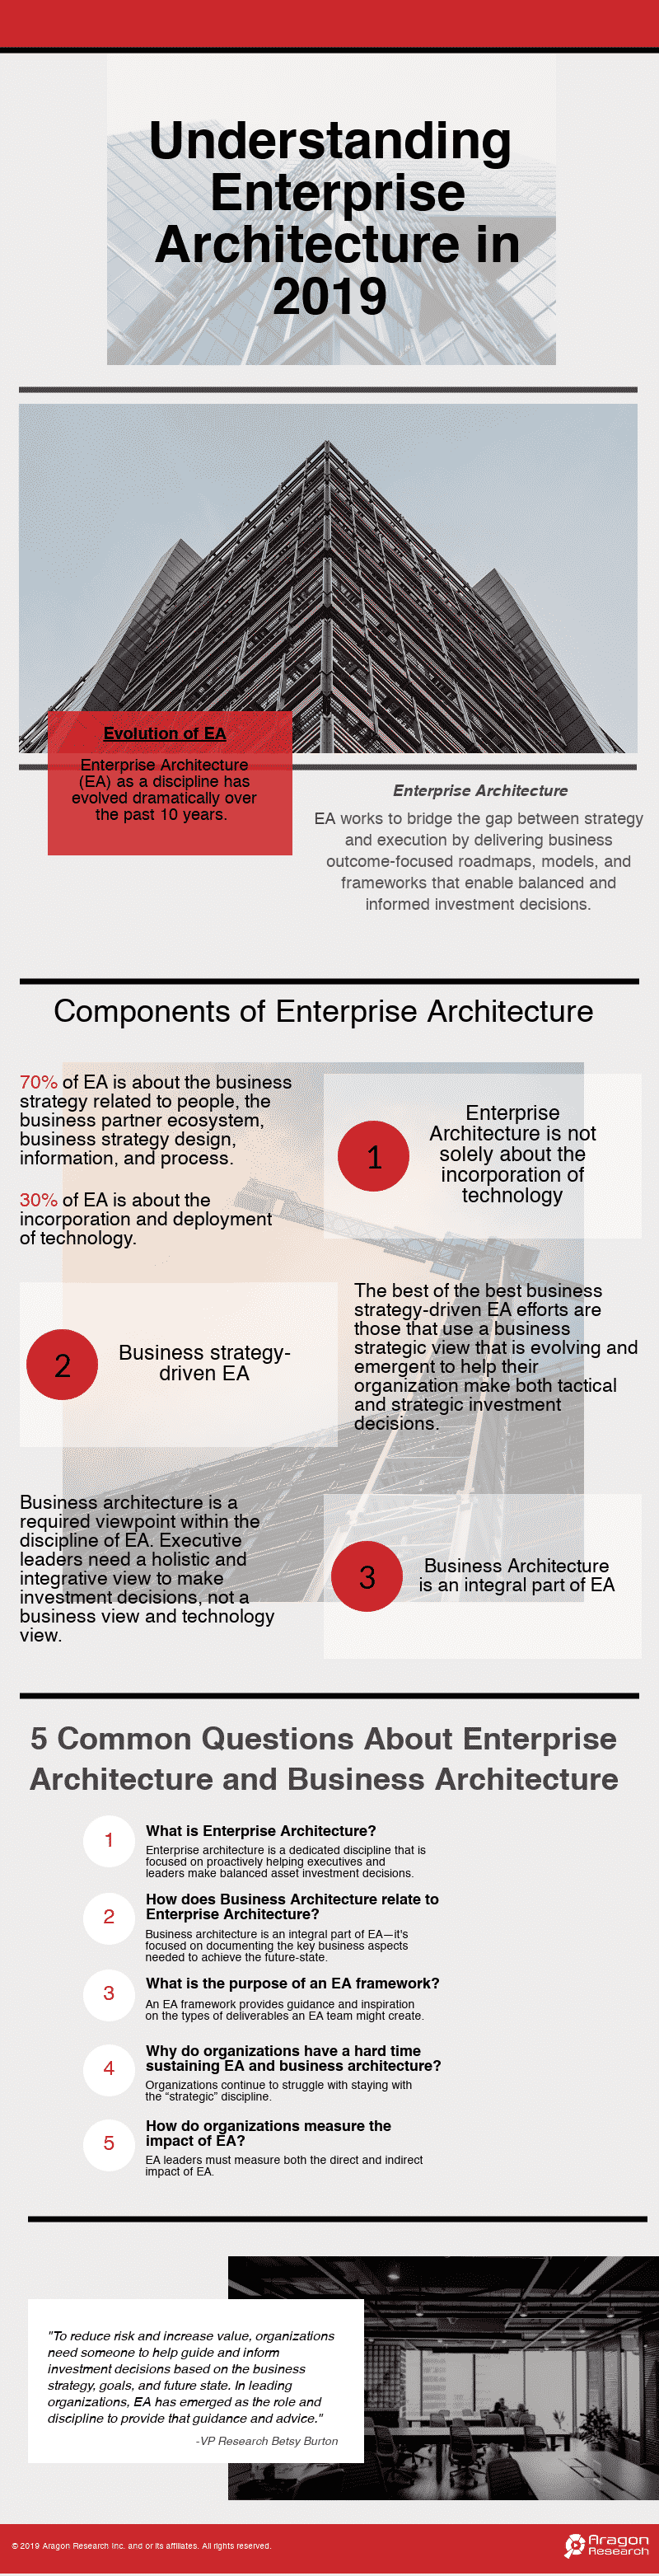 Enterprise Architecture Infographic - [Infographic] Understanding Enterprise Architecture